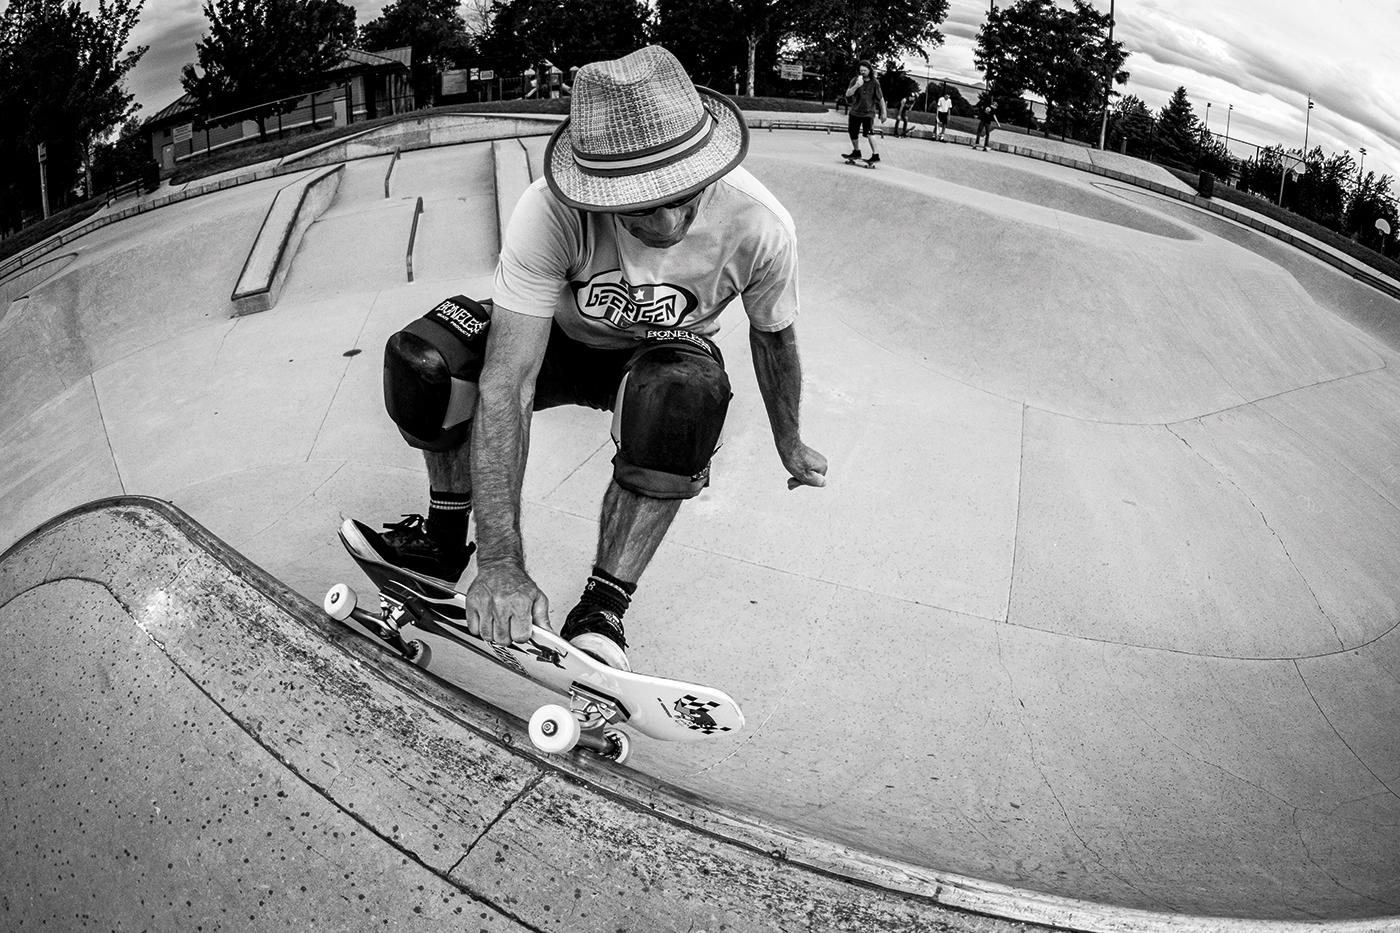 Jim Noble – Frontside 50-50 – Sandy Skate Park, Sandy